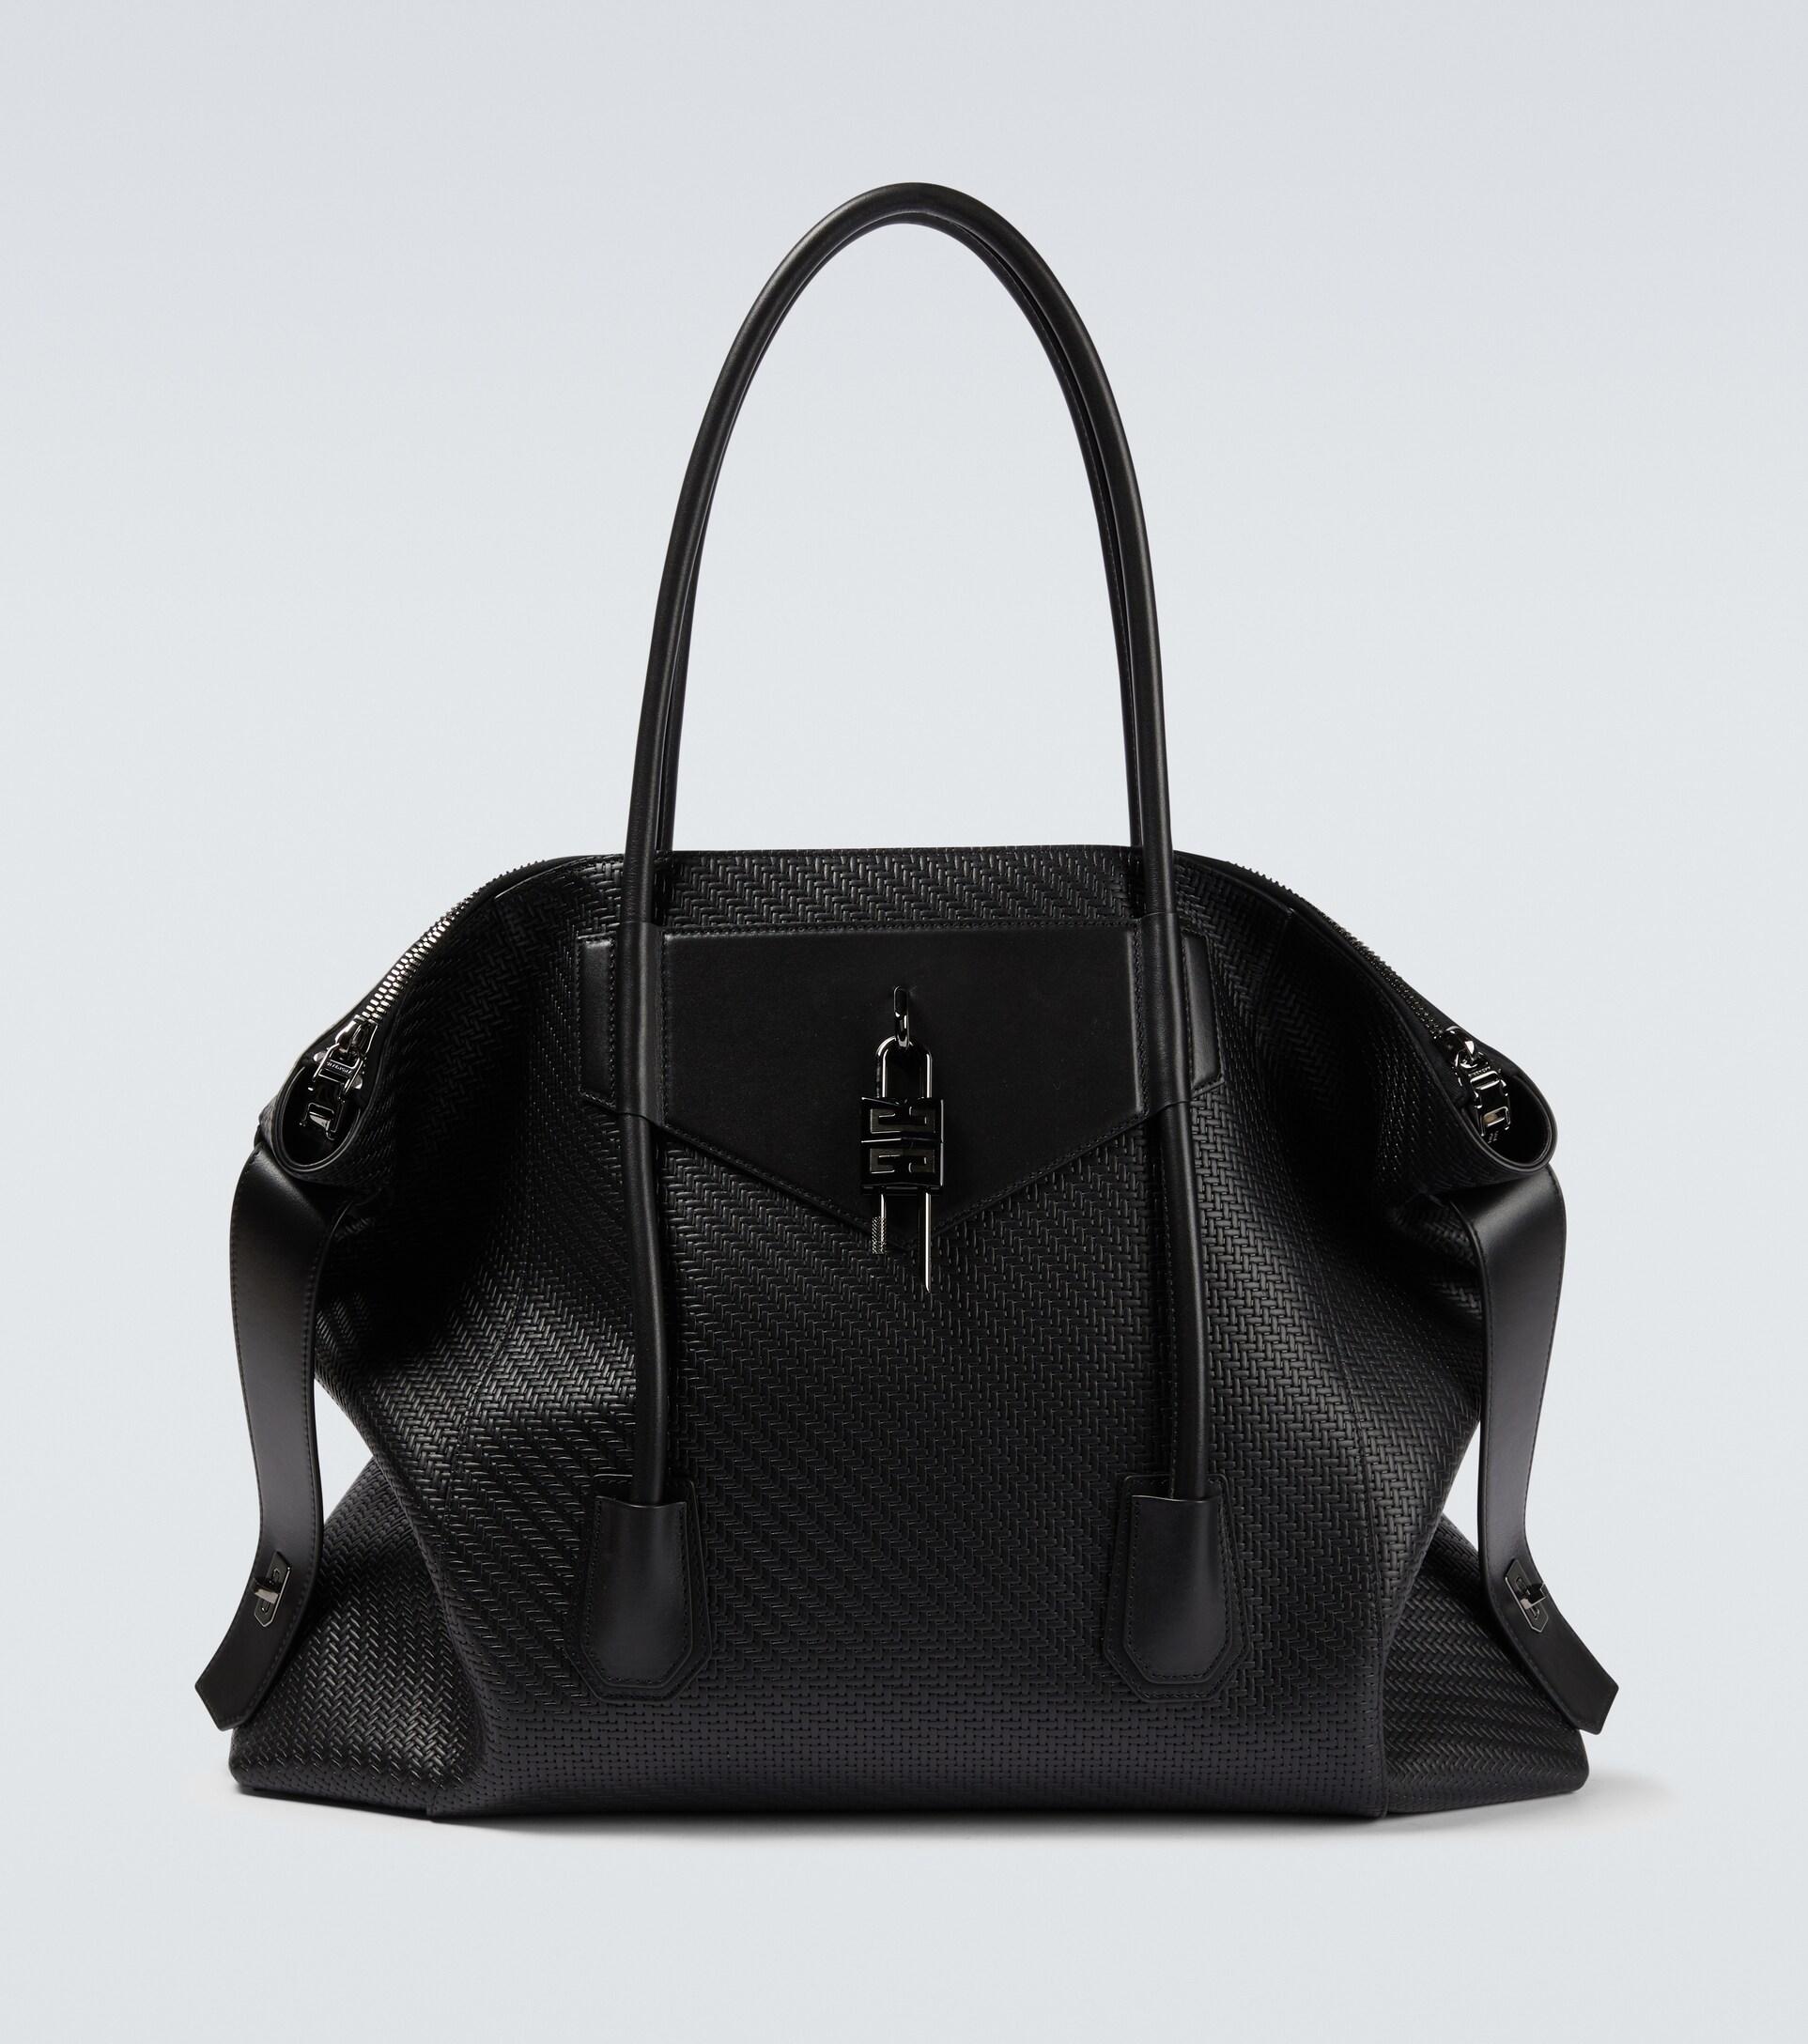 Totes bags Givenchy - Antigona Soft large bag - BB50F0B0WD001